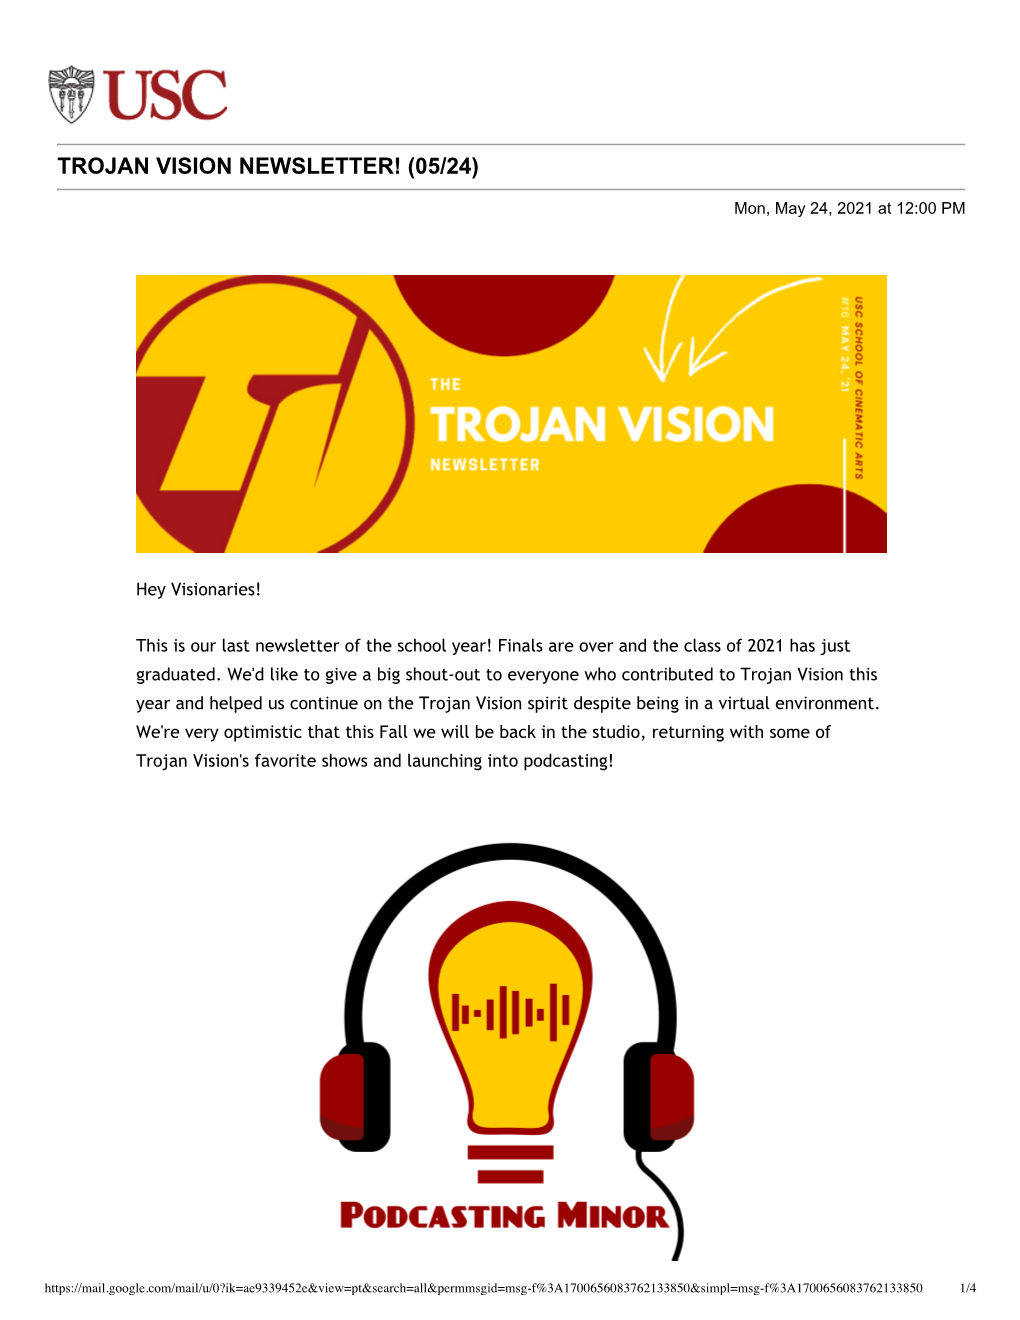 Trojan Vision Newsletter #16 – May 24, 2021